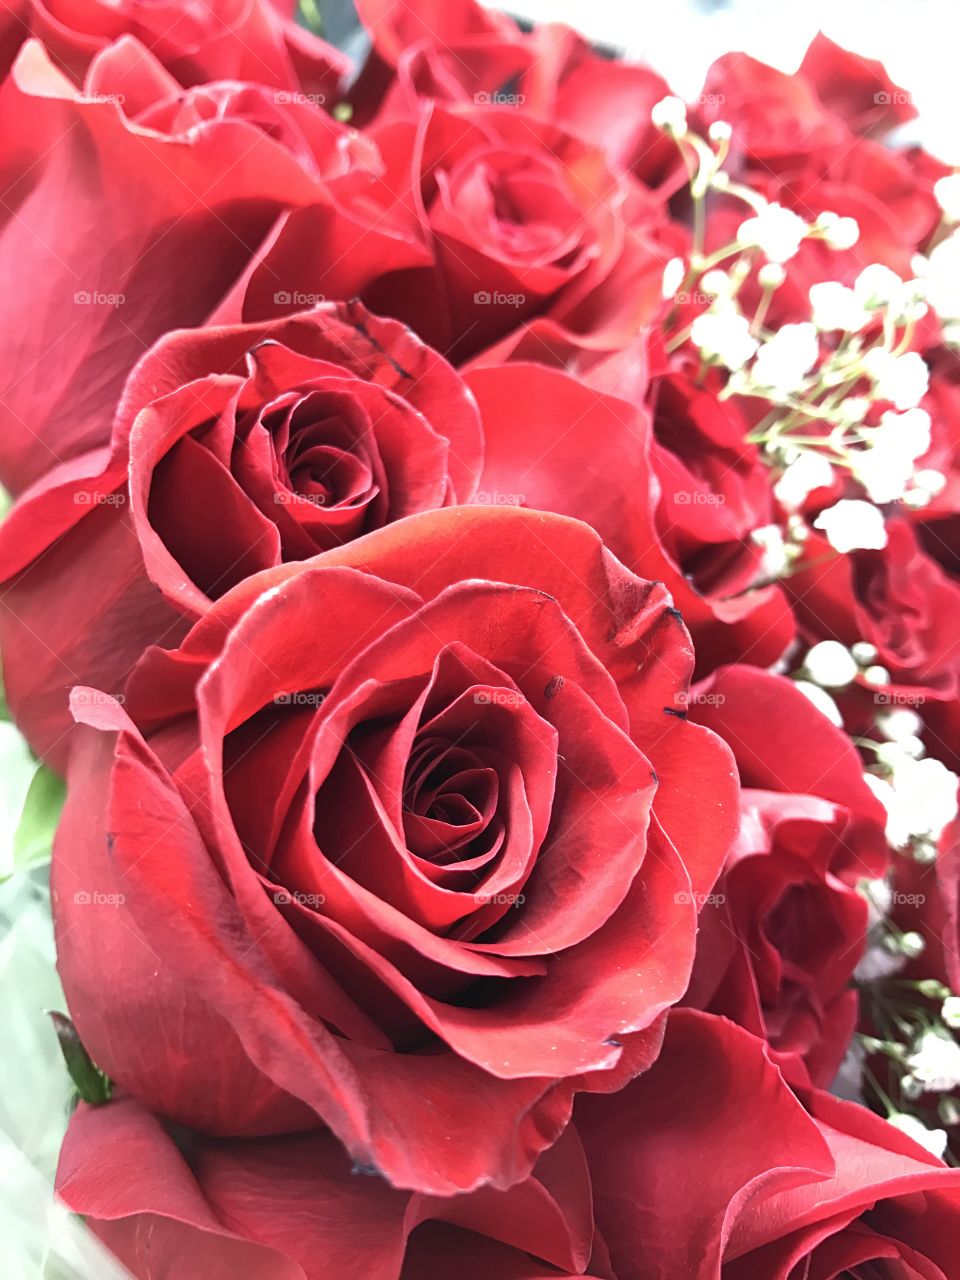 Rose, Love, Romance, Petal, Flower